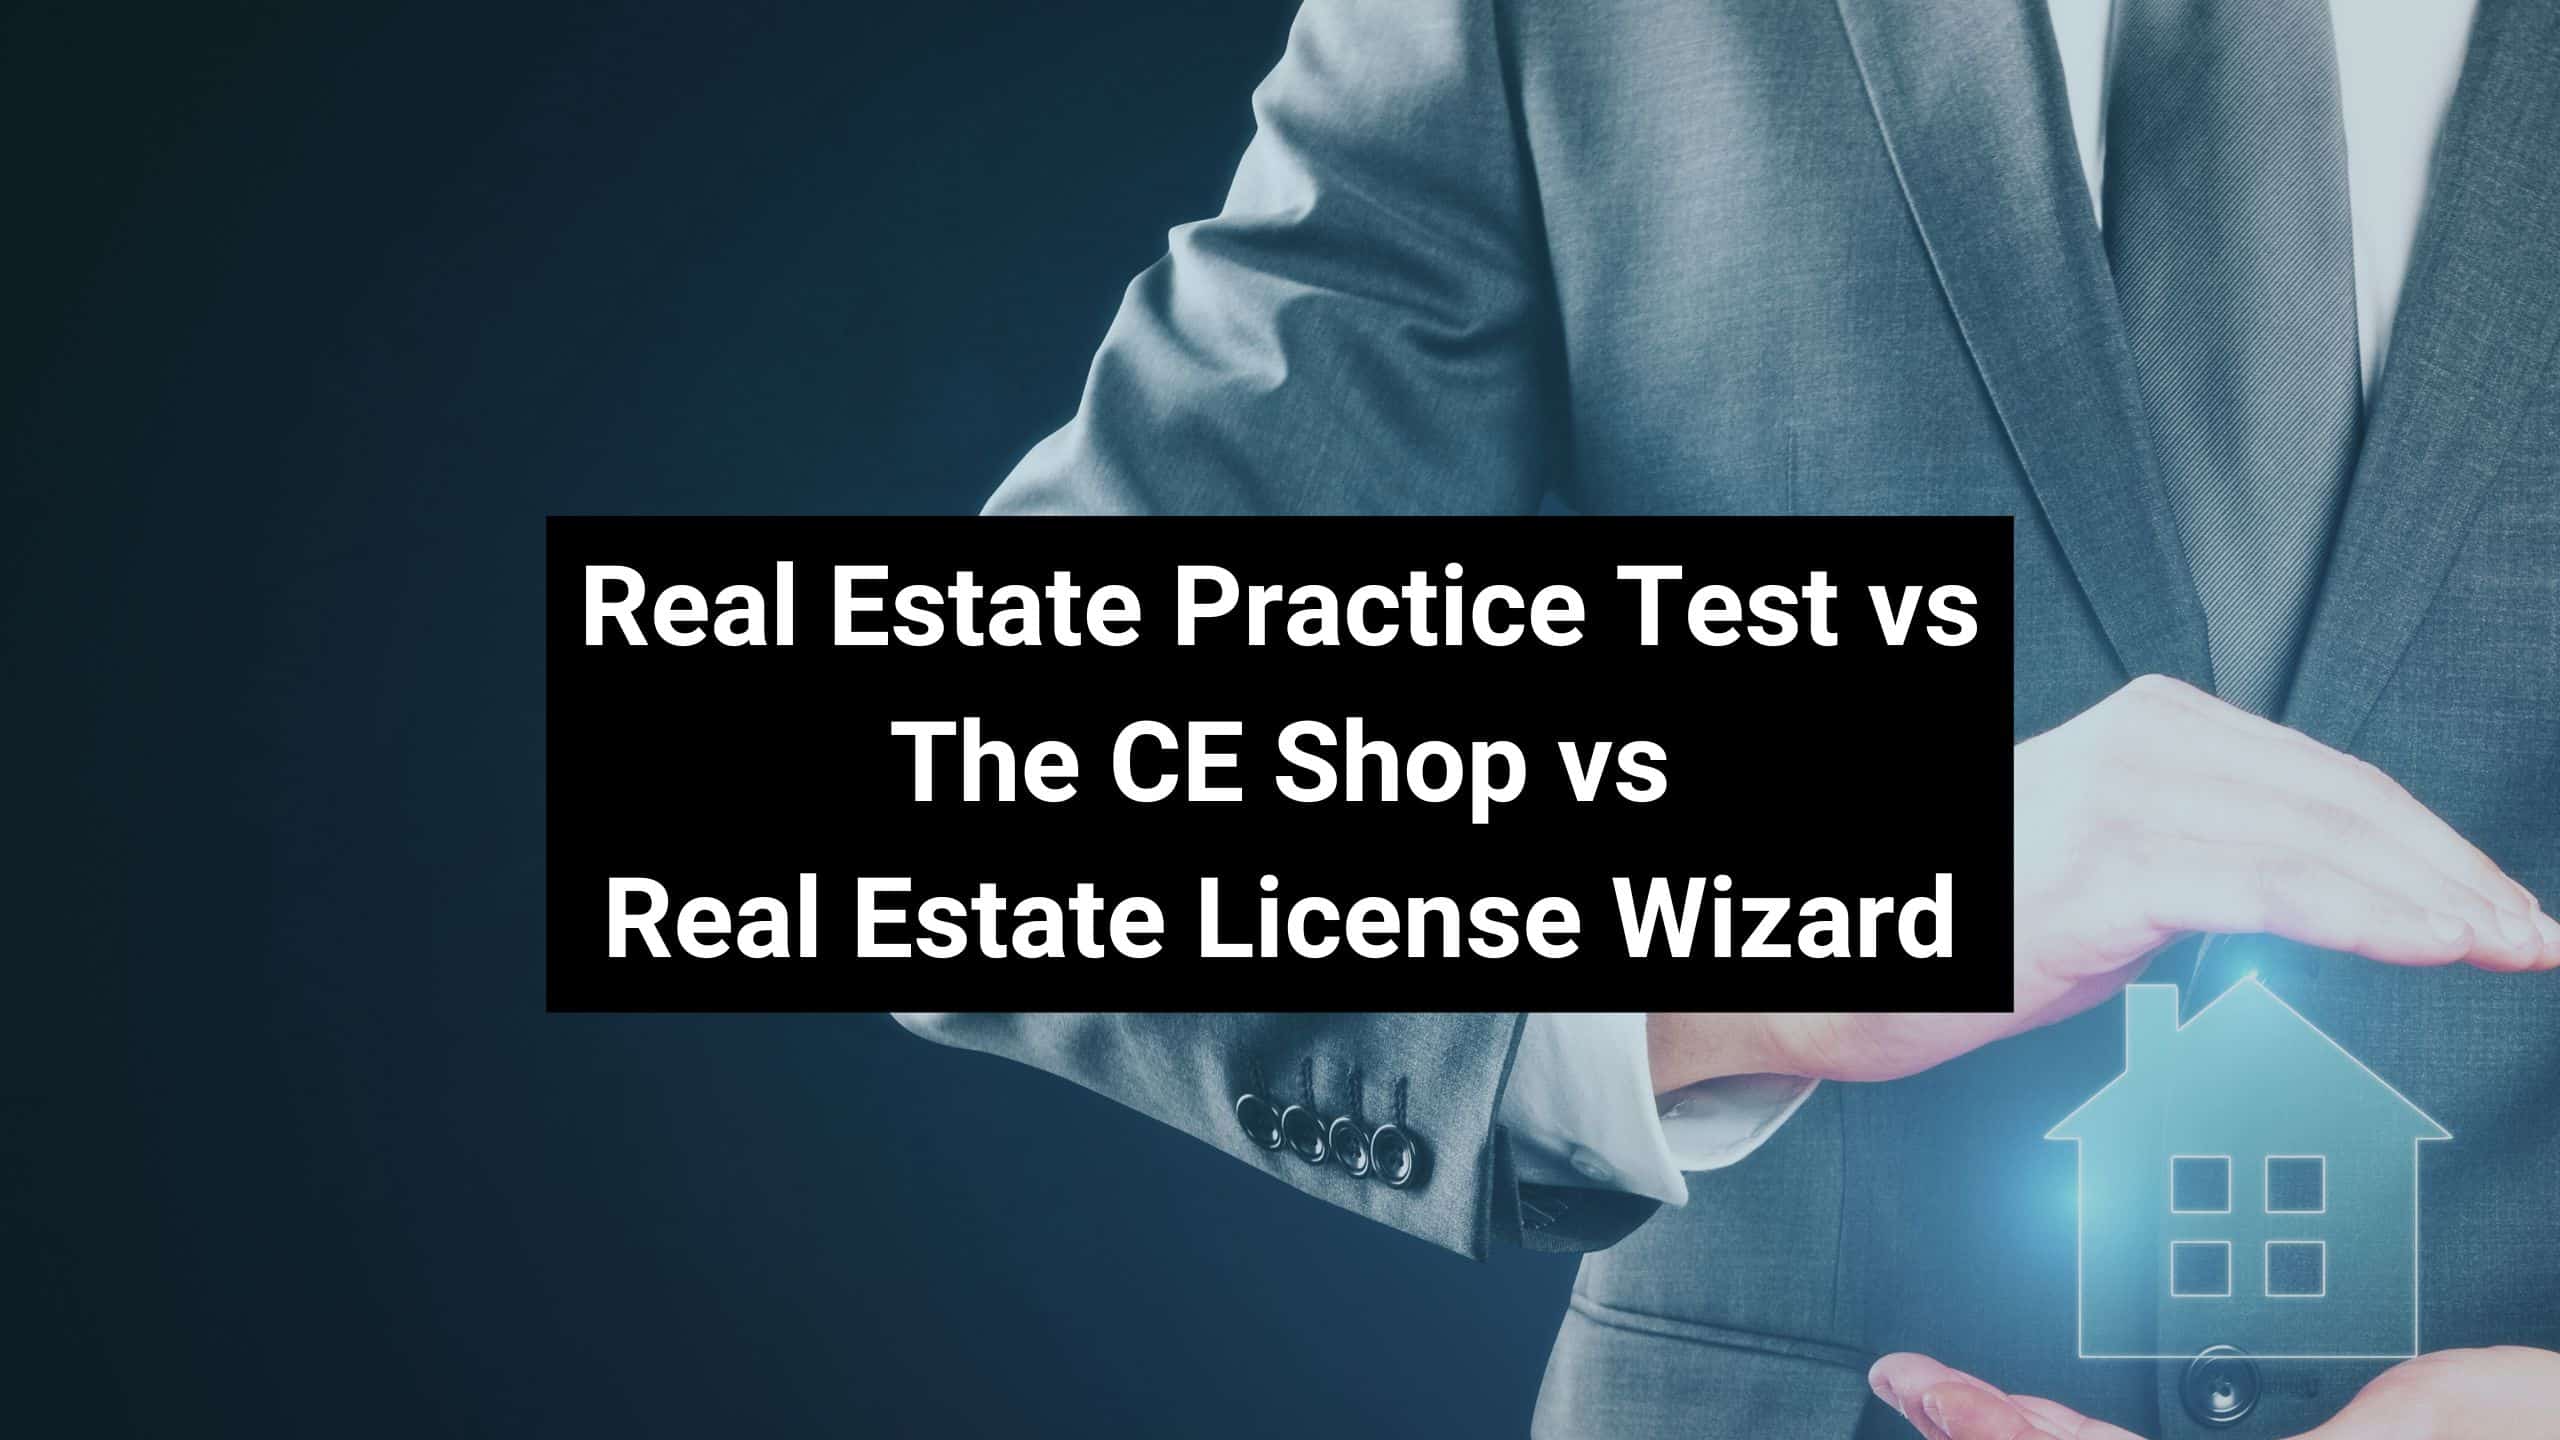 Real Estate Practice Test vs The CE Shop vs Real Estate License Wizard